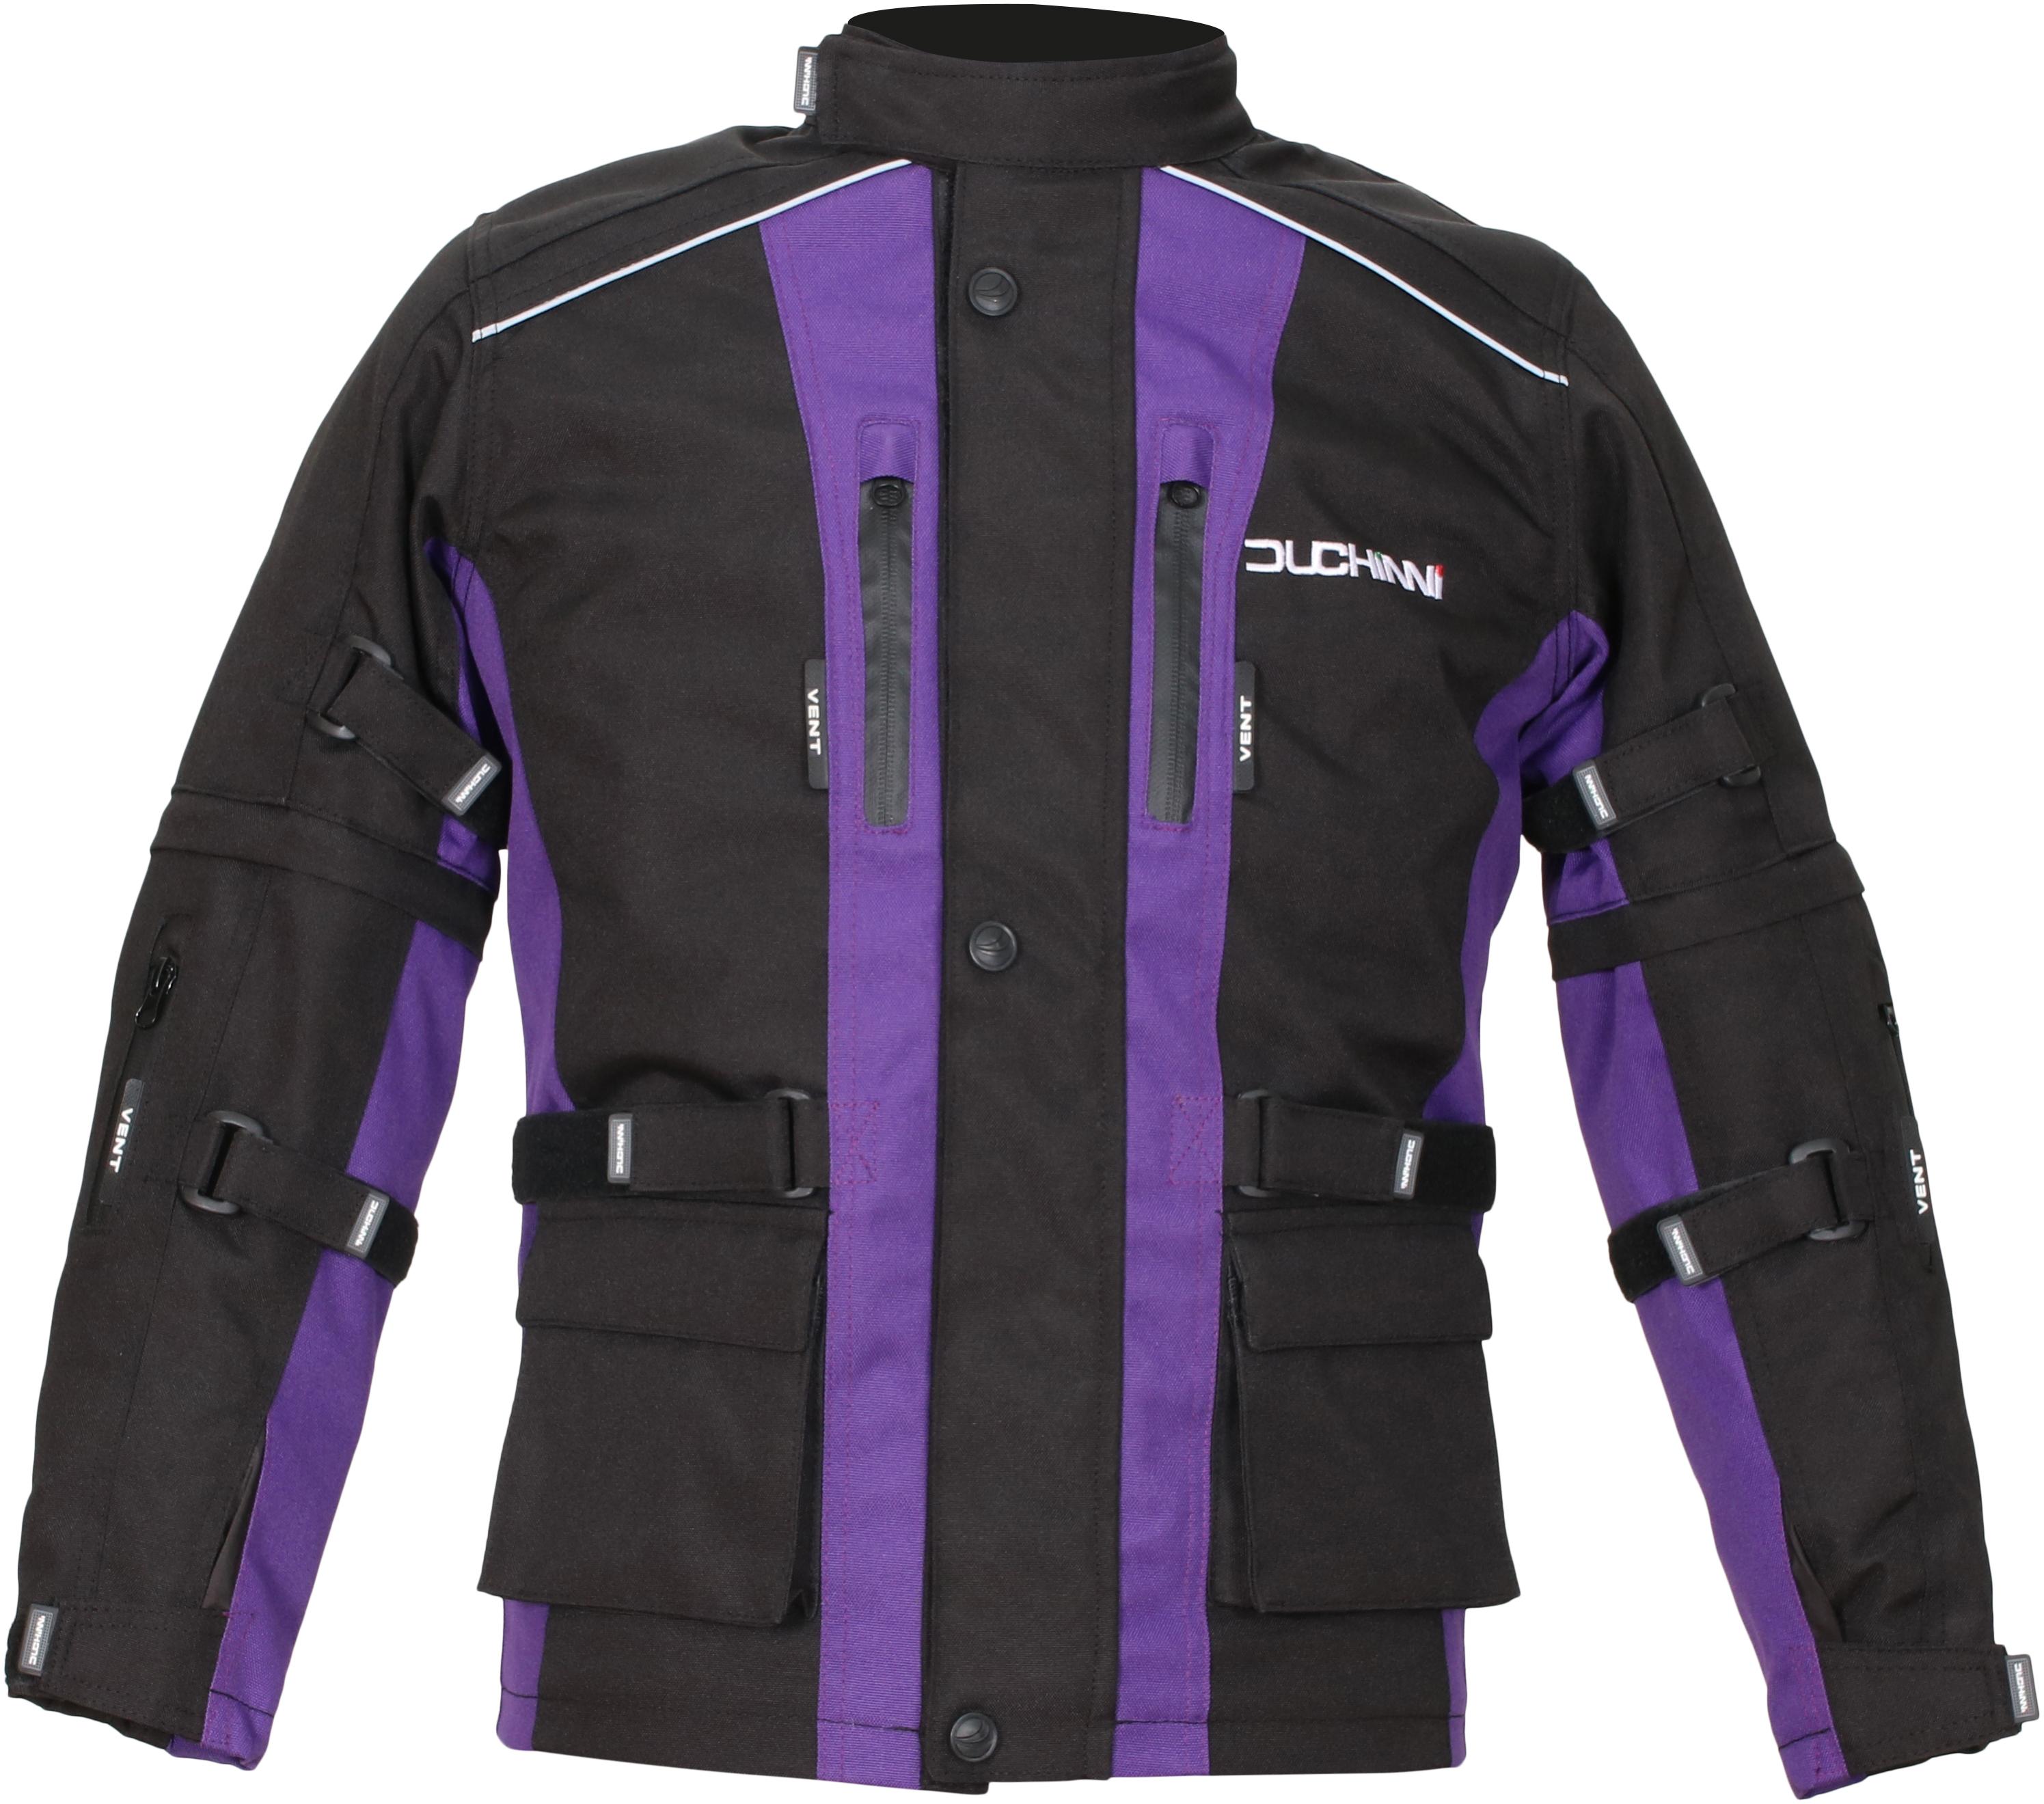 Duchinni Jago Youth Motorcycle Jacket - Black And Purple, Xl